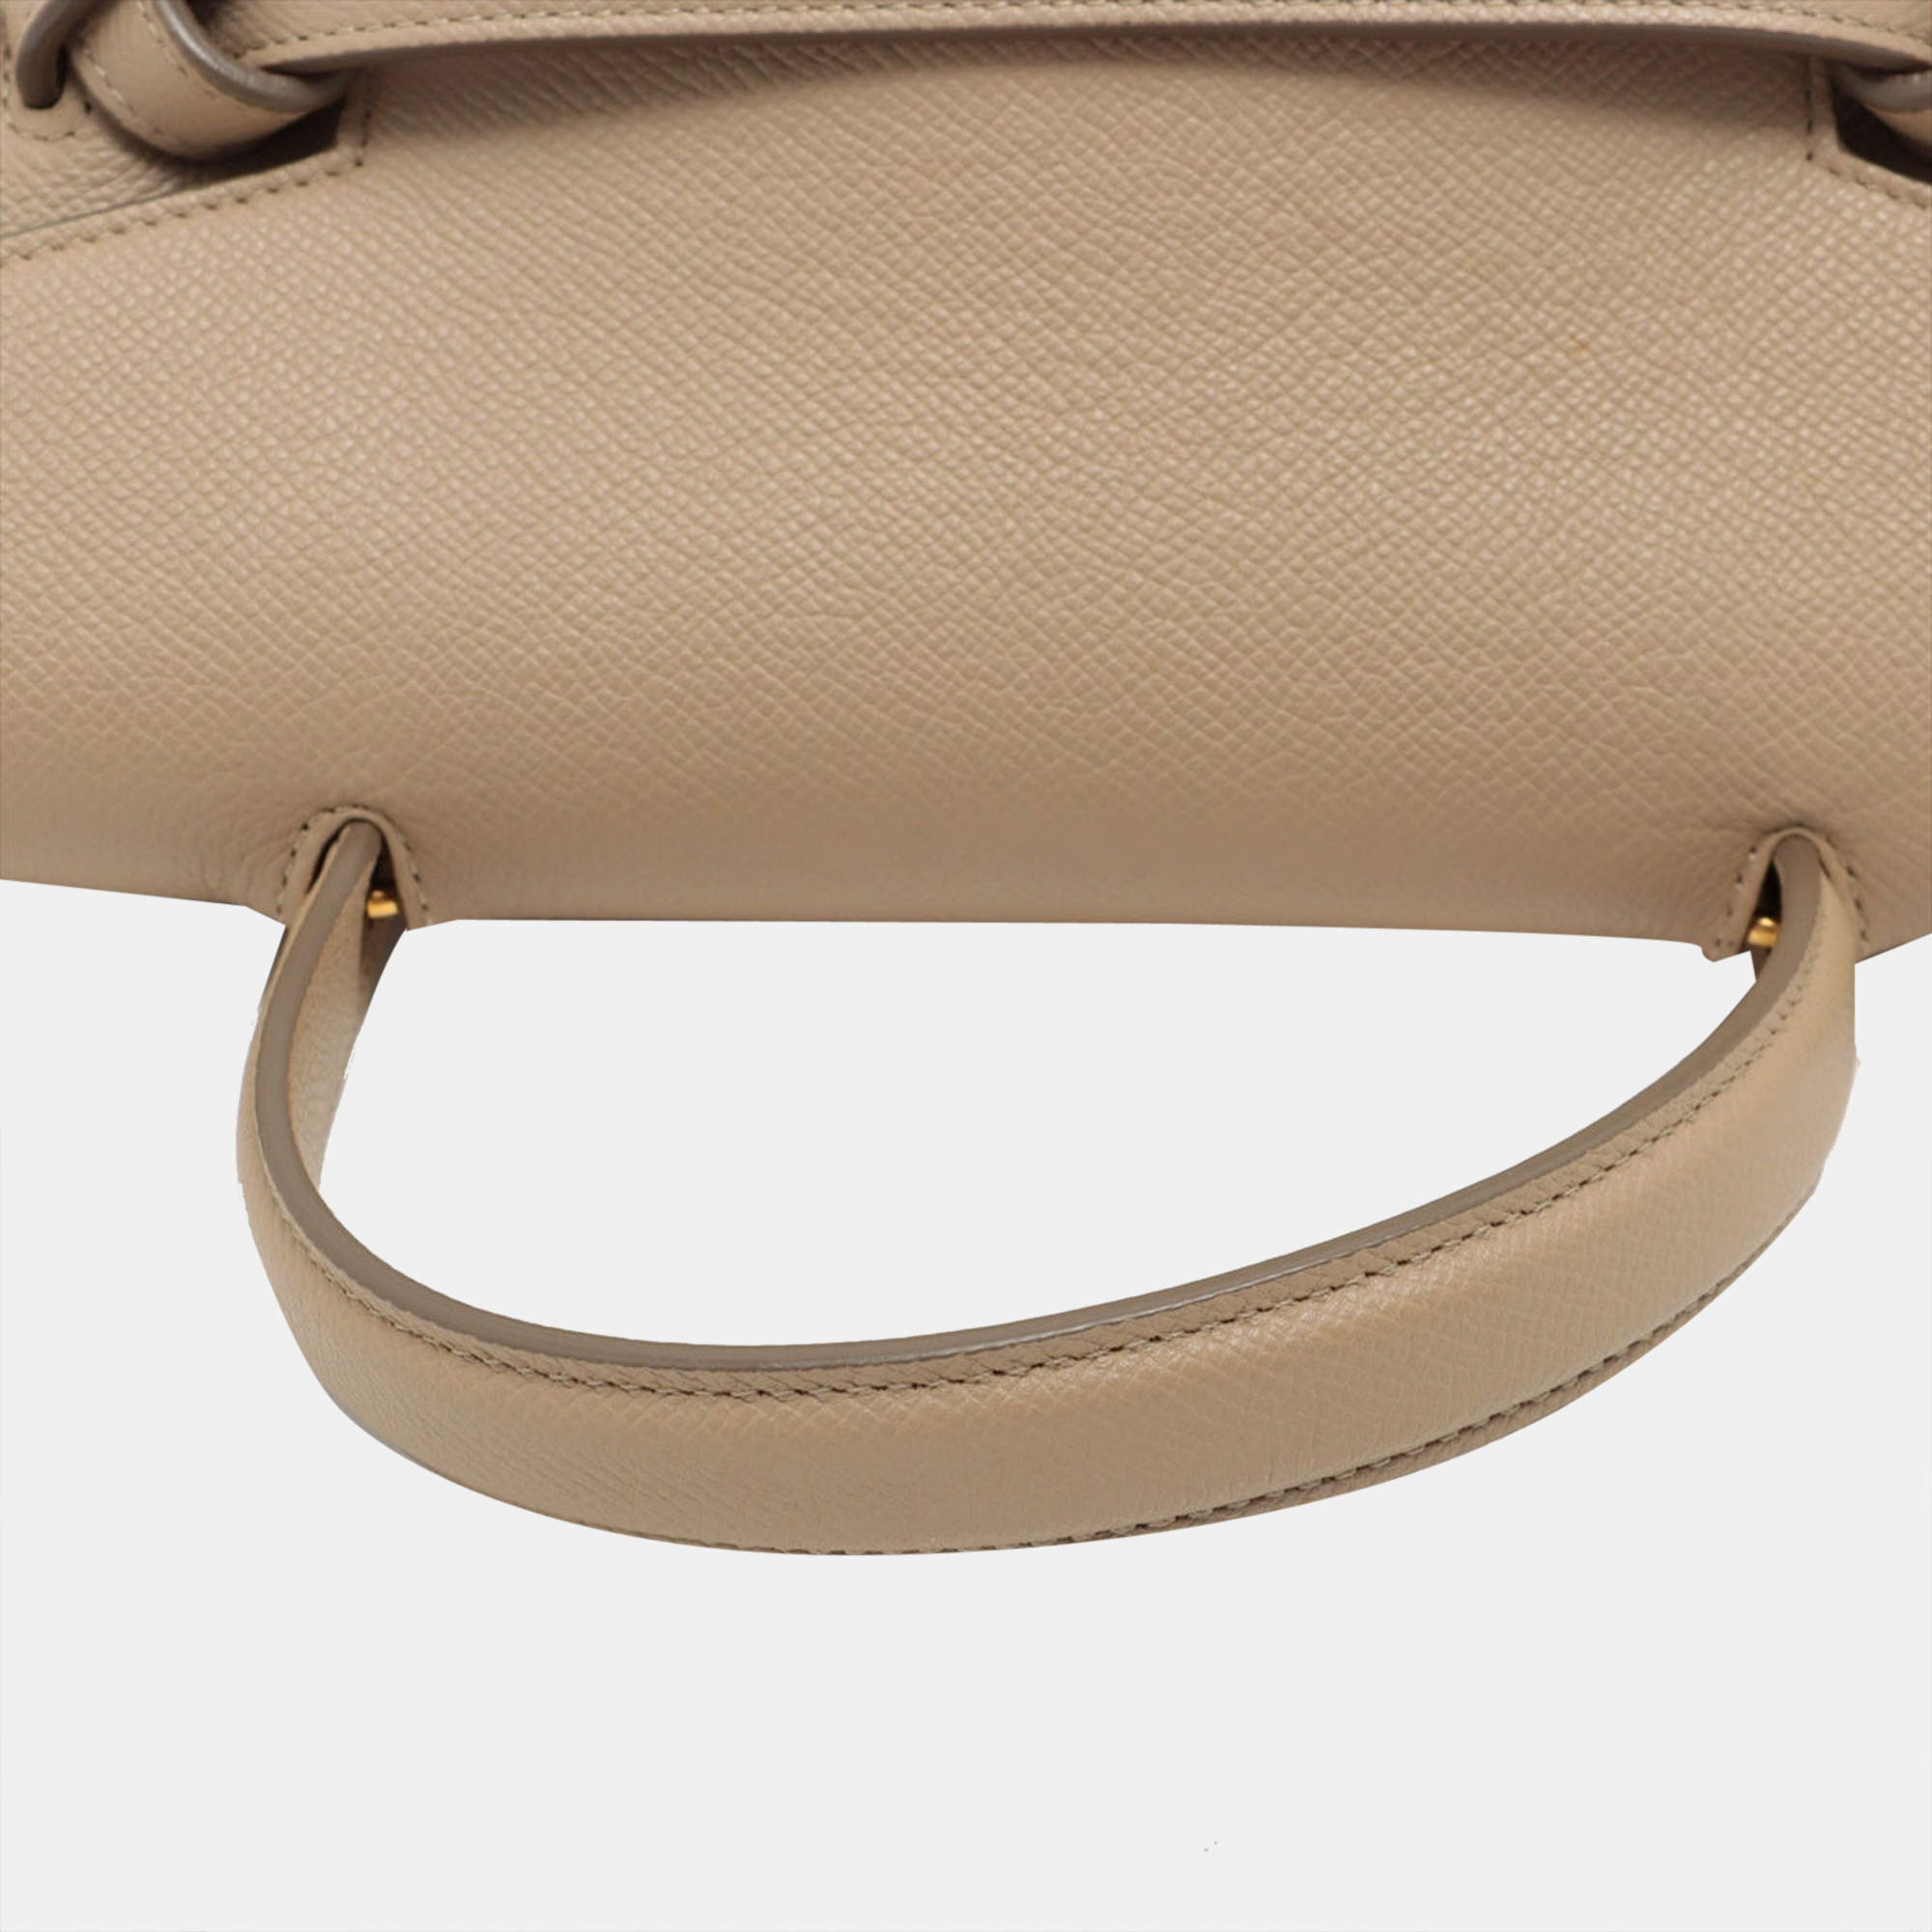 CELINE Belt Bag Micro Leather 2way handbag Beige Celine